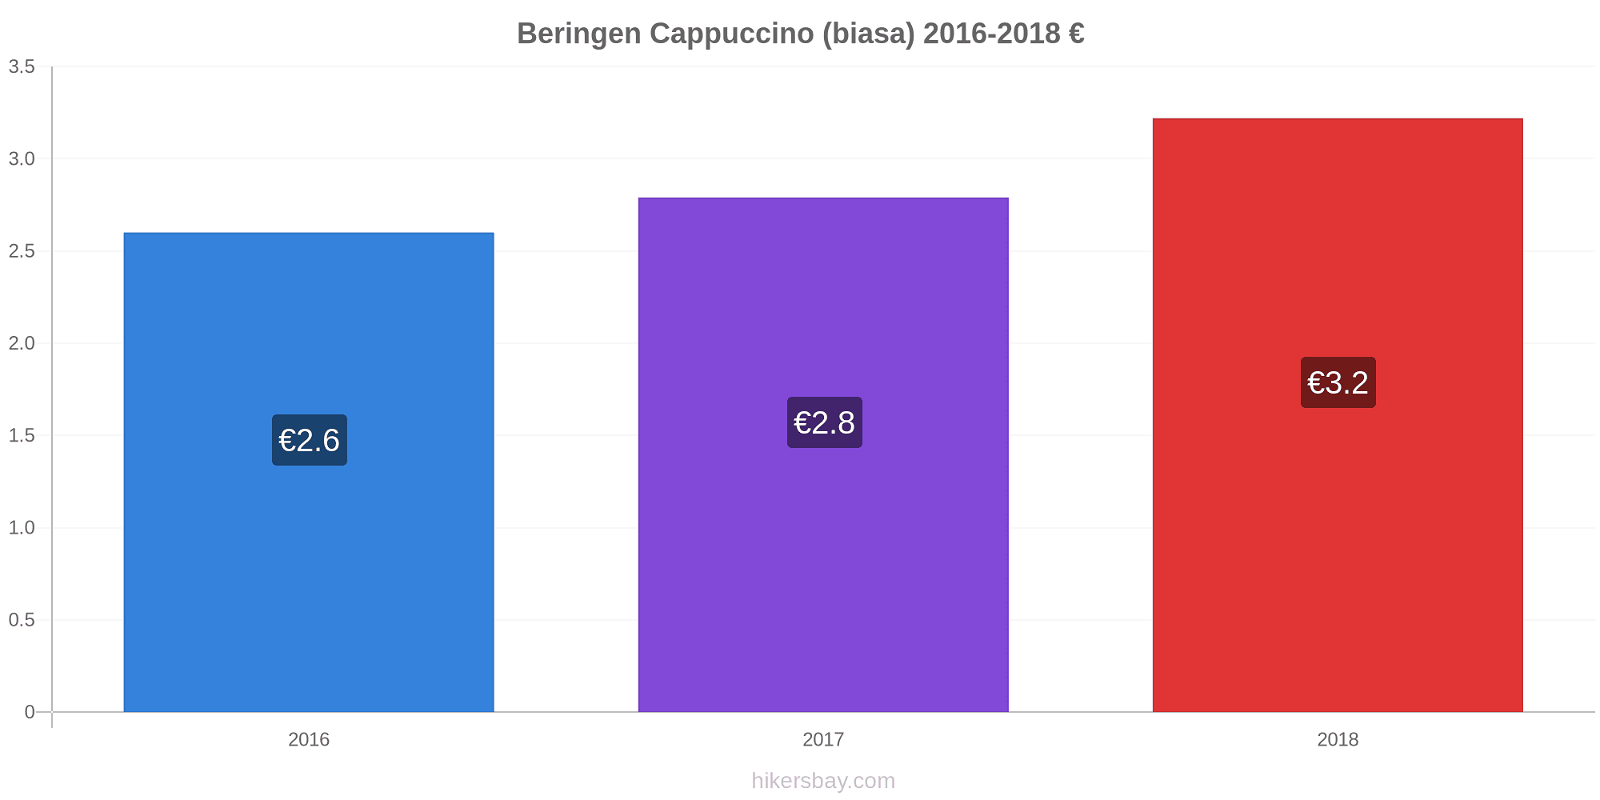 Beringen perubahan harga Cappuccino (biasa) hikersbay.com